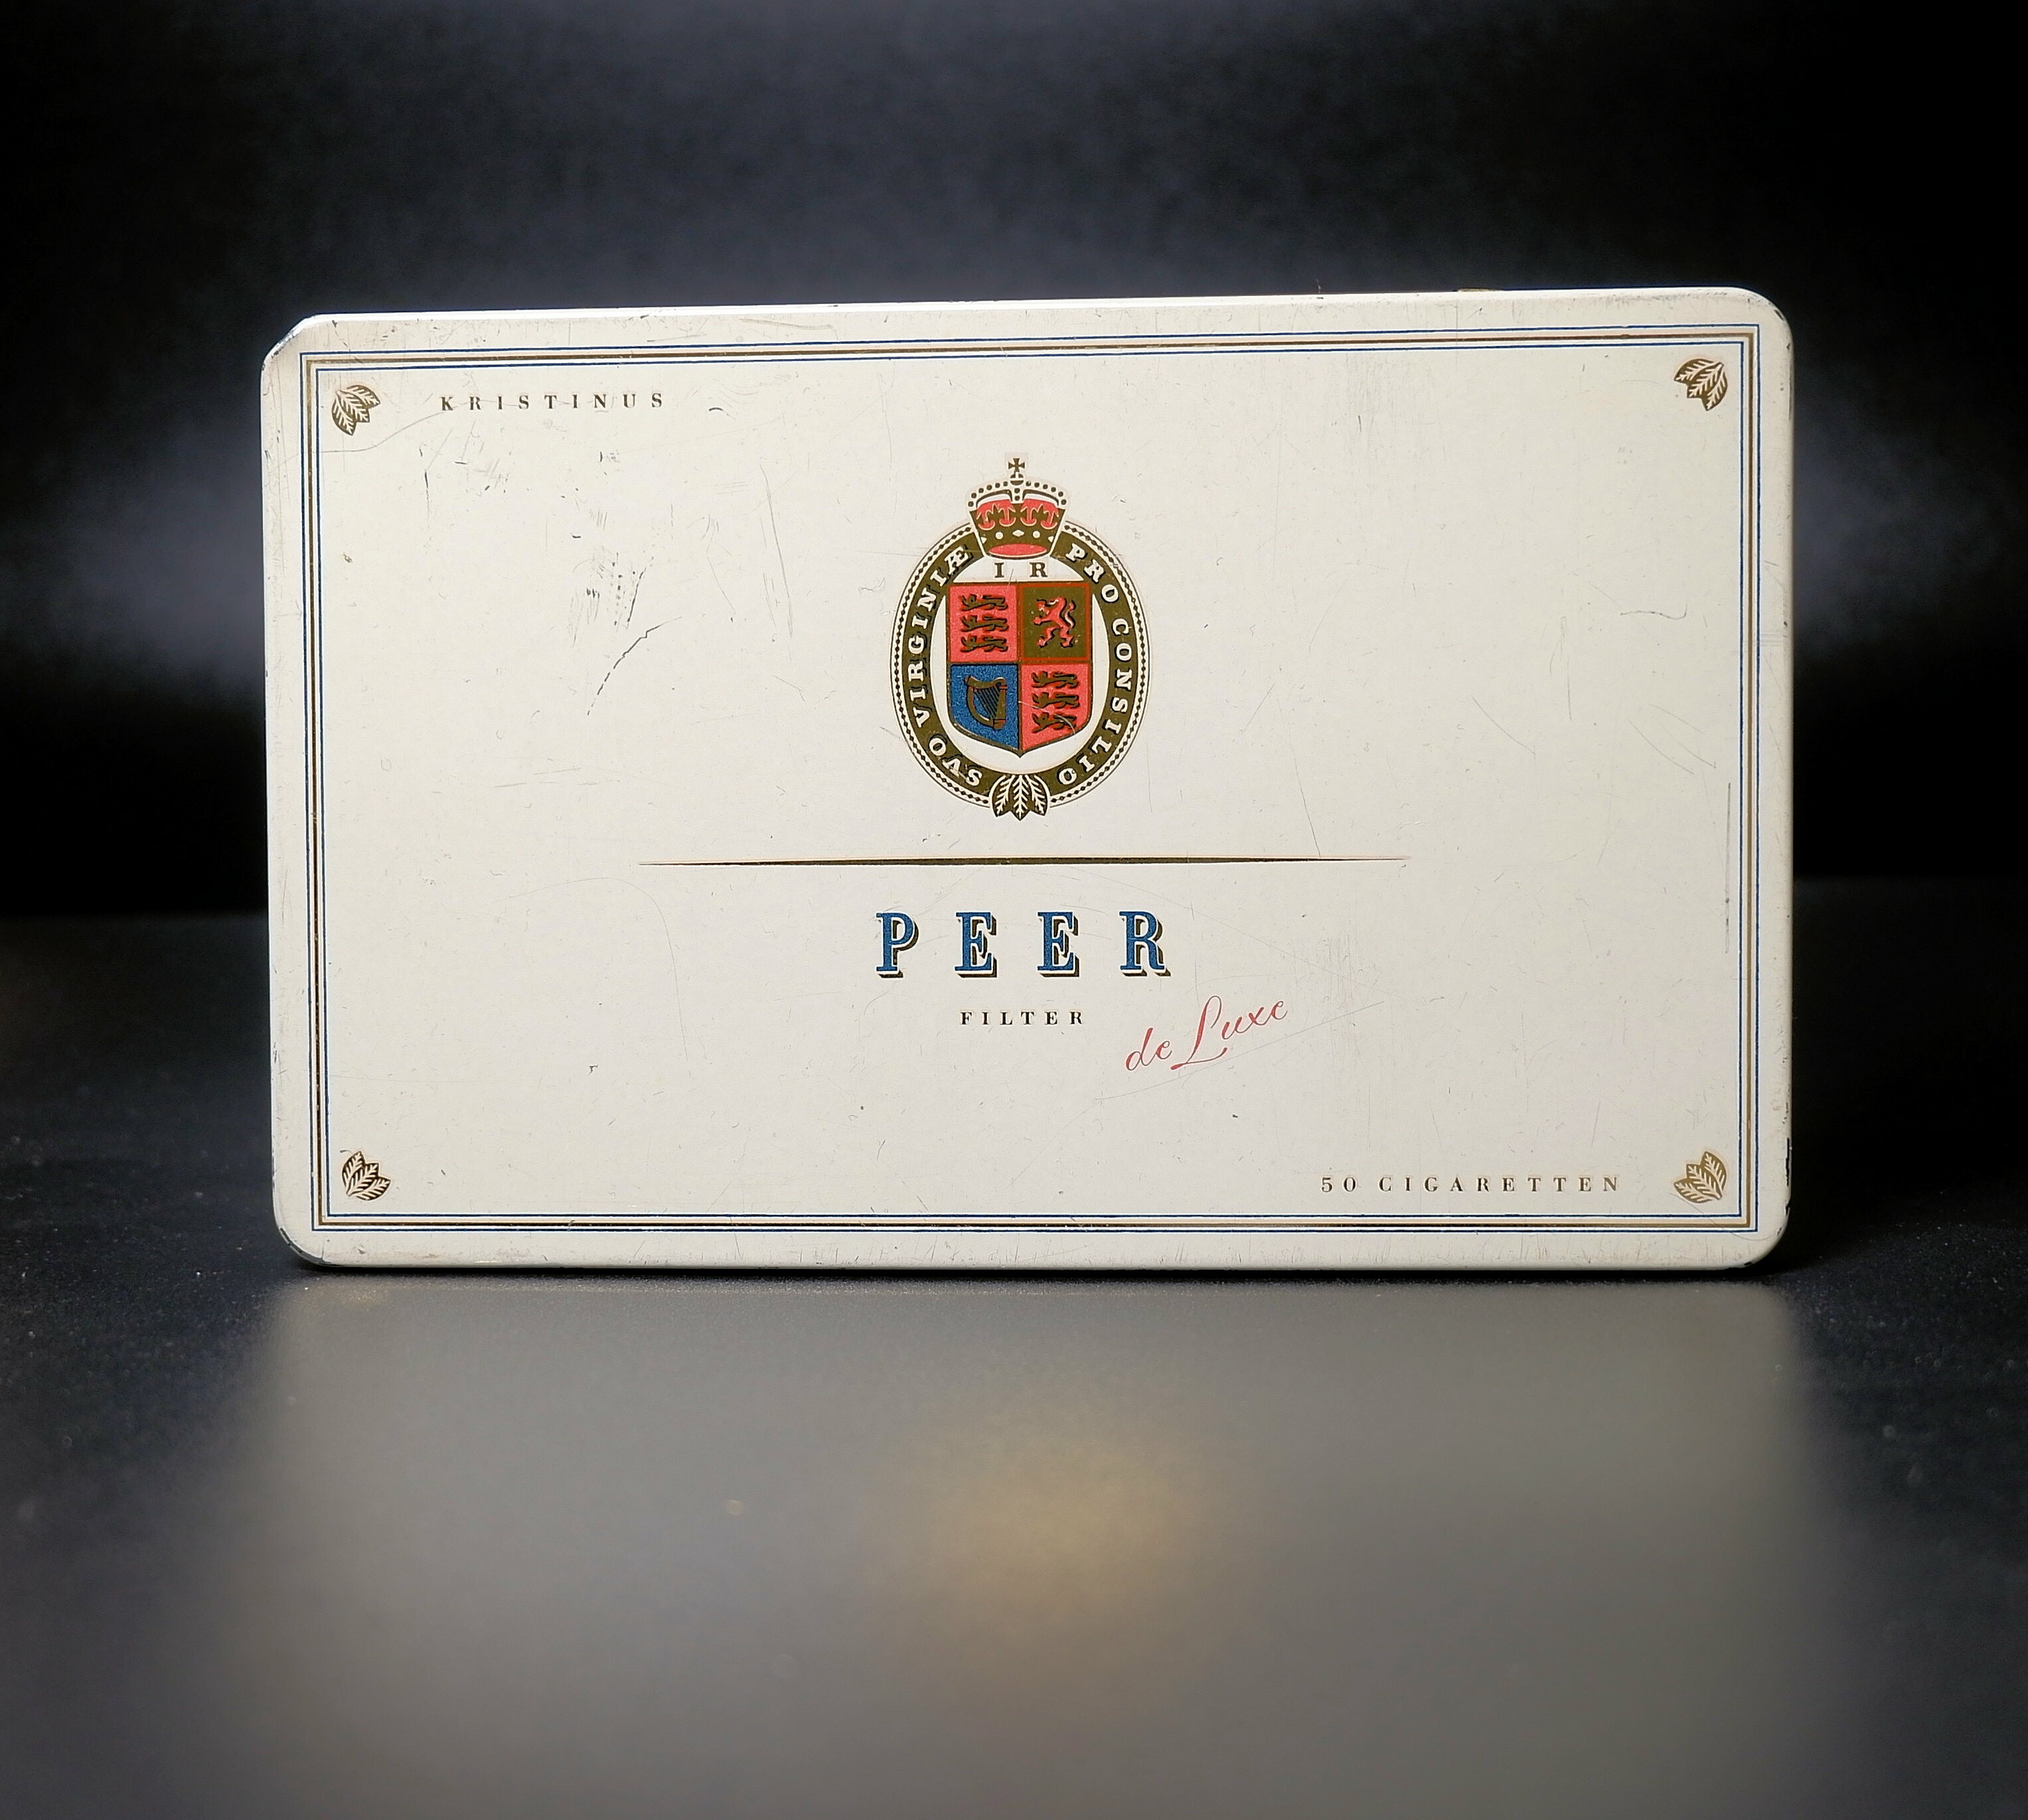 Zigarettenmarke	Peer de Luxe Filter	50 Stück Blechpackung (Volkskunde- und Freilichtmuseum Roscheider Hof CC0)